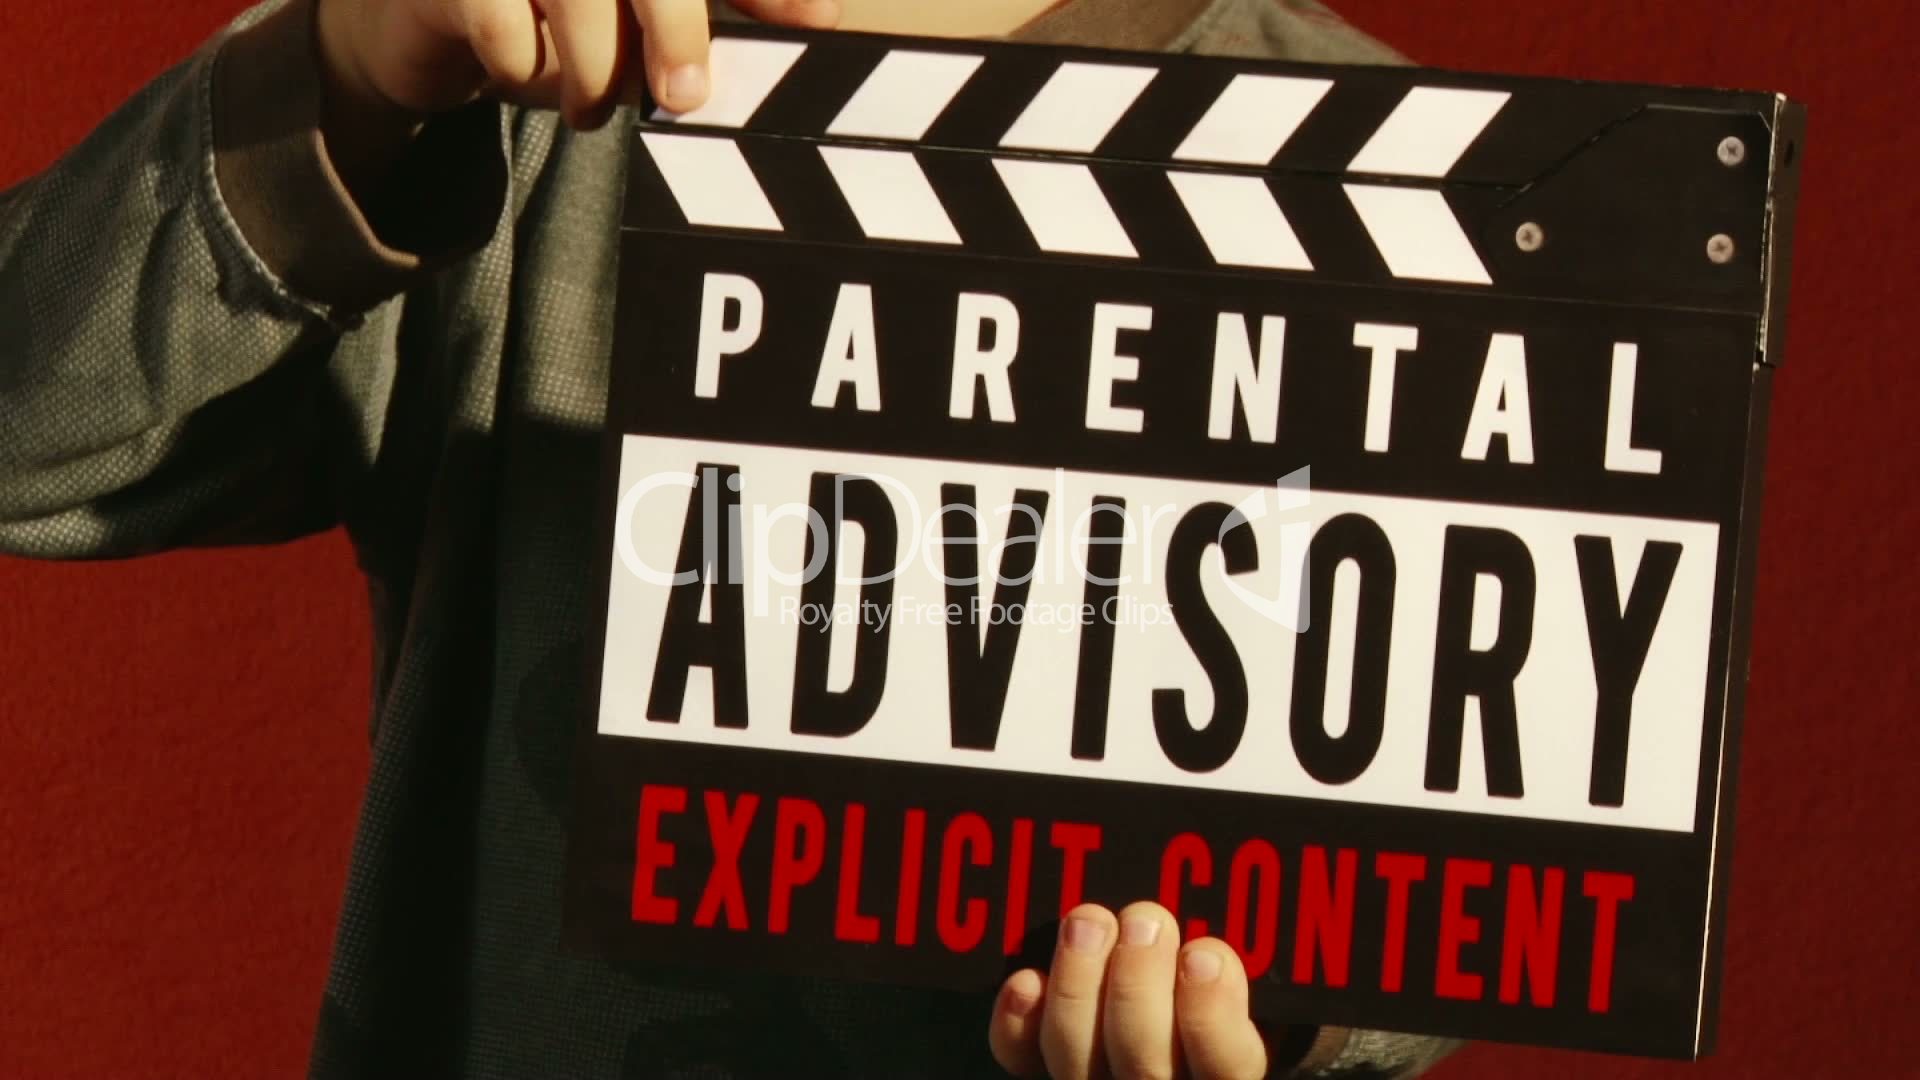 3-2085205-Boy-Parental-Advisory-explicit-content